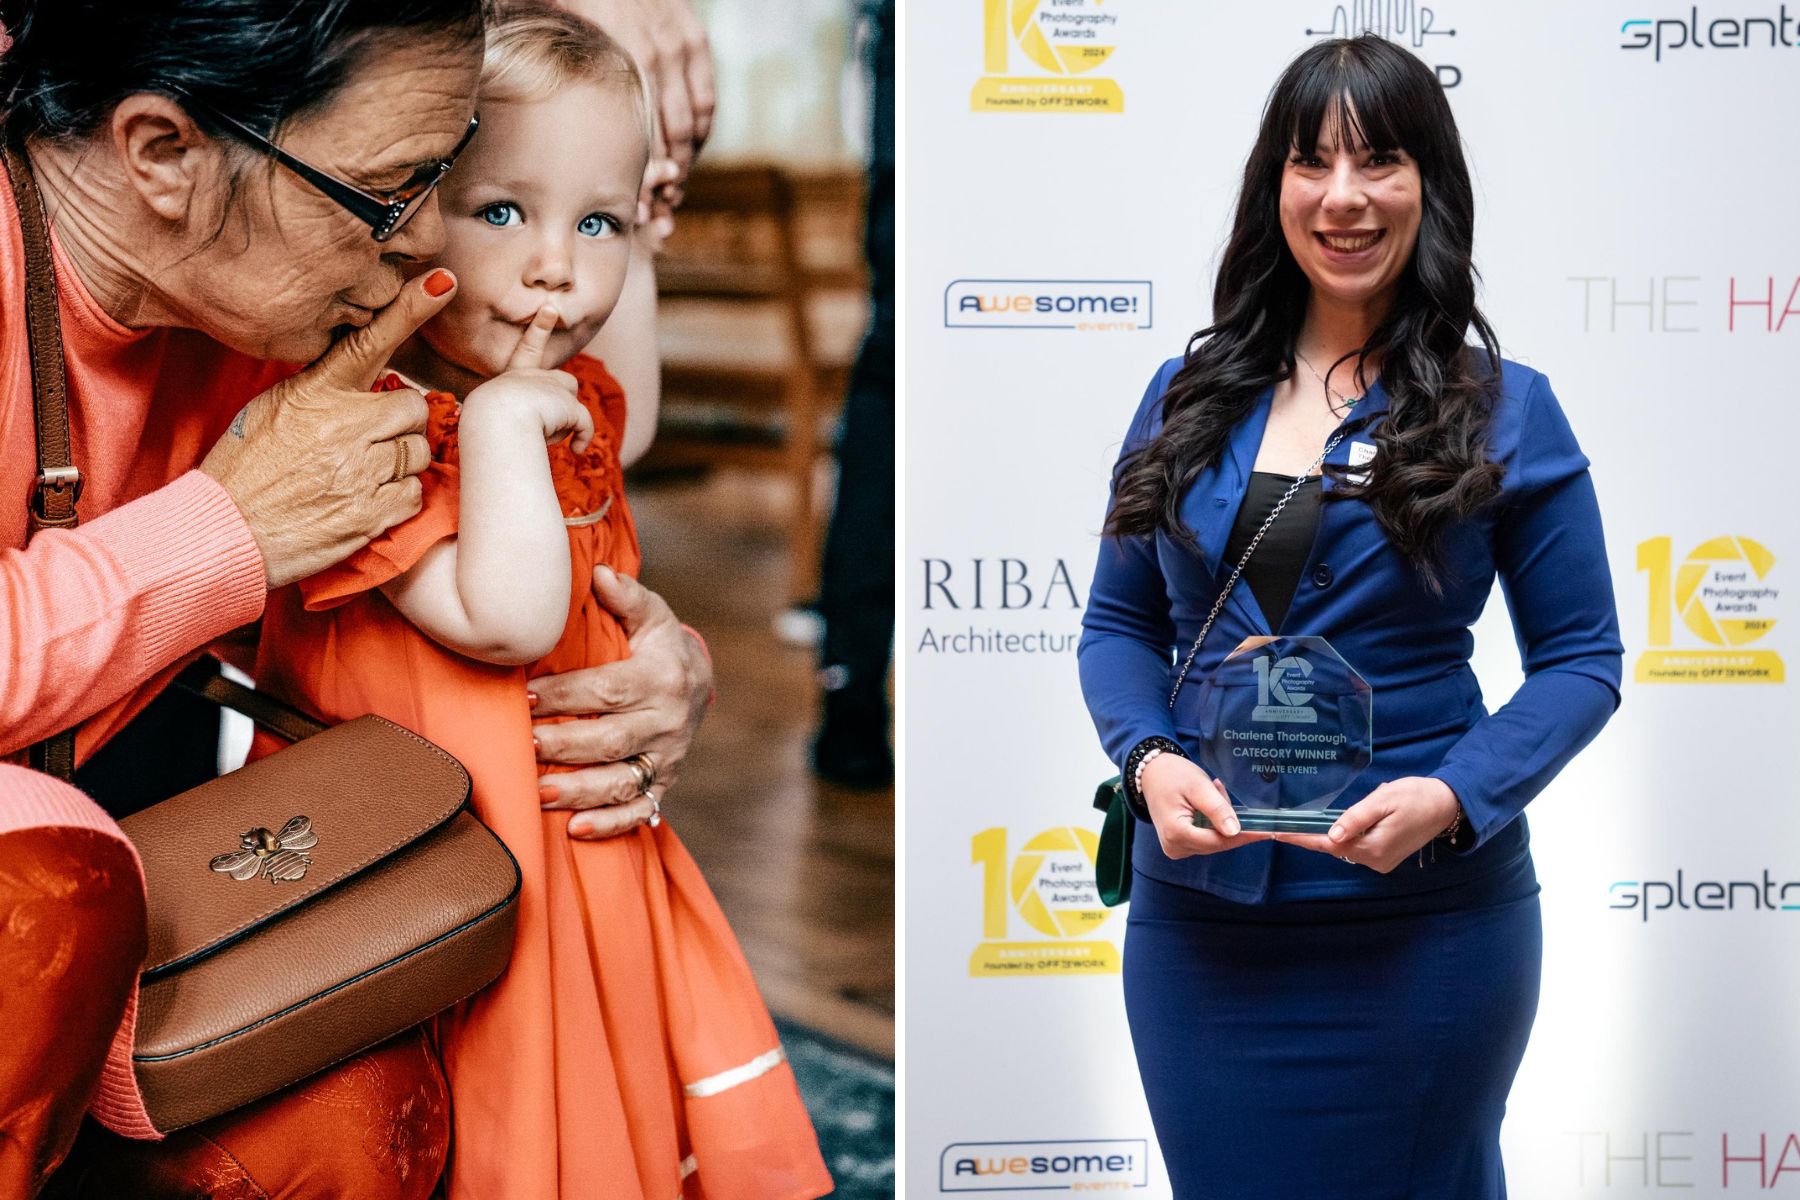 Silence is Golden, left, won the award for Charlene, right. Pictures: Charlene Thornborough/DWGH Images